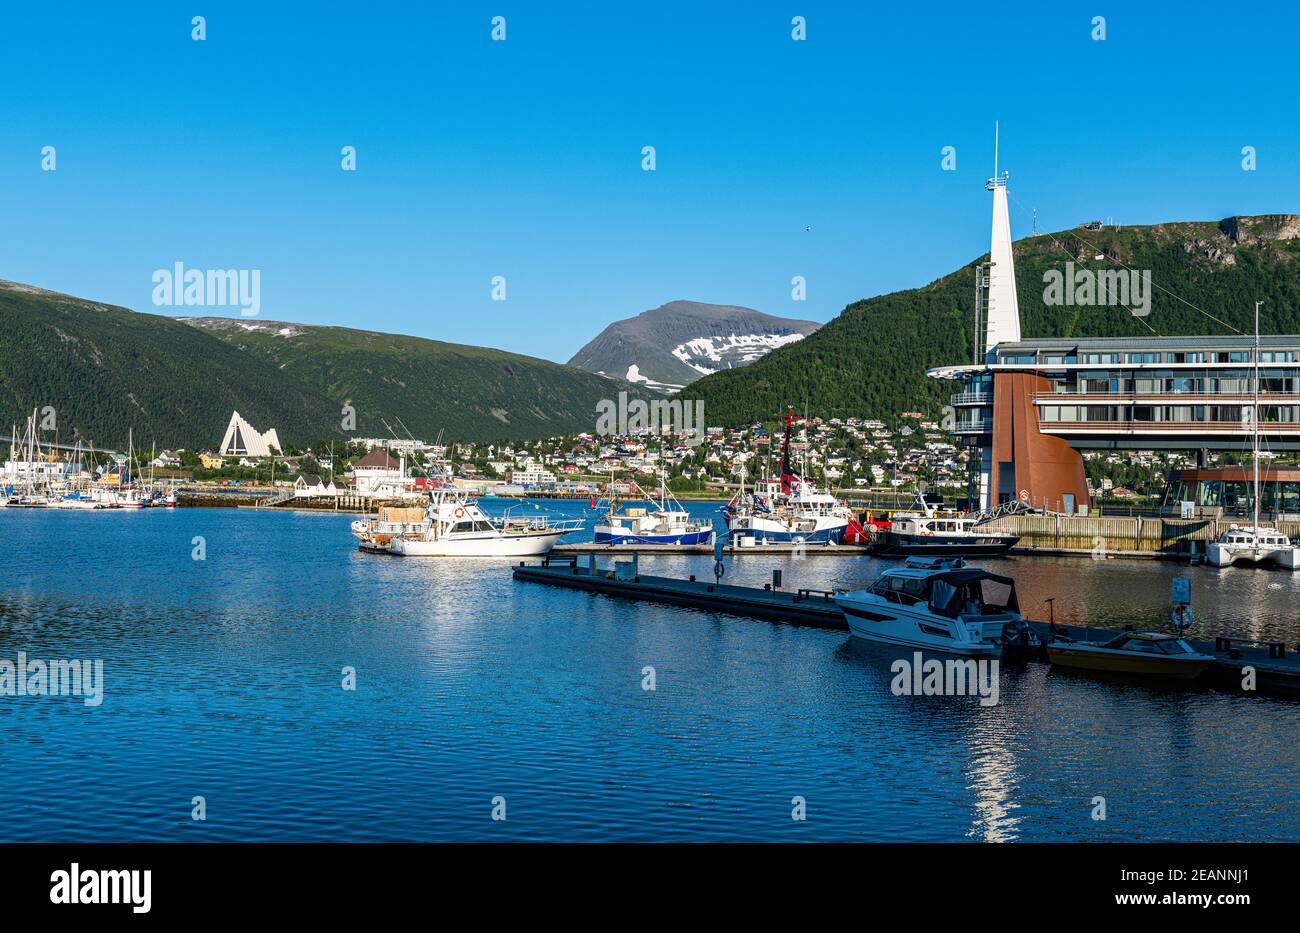 Hafen von Tromso, Norwegen, Skandinavien, Europa Stockfoto